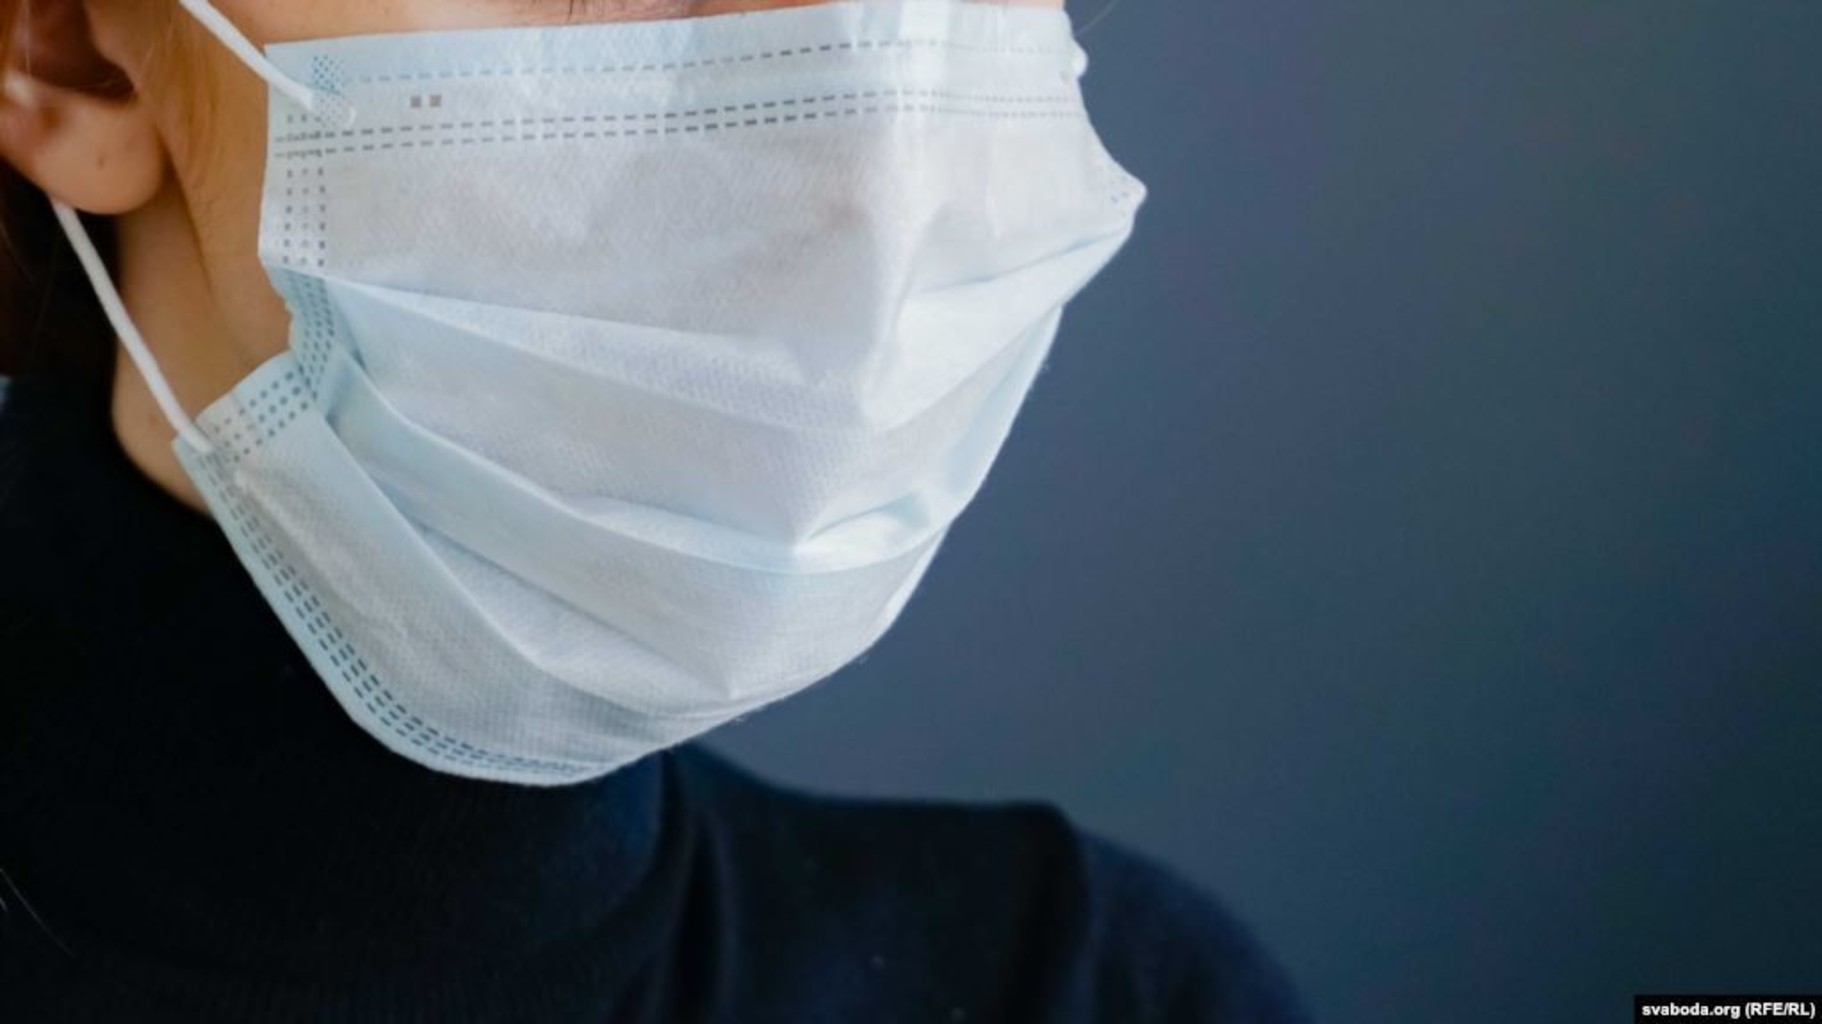 Суть медицинской маски. Маска медицинская. Медицинская маска в руке. Маска защитная медицинская. Медицинские маски от коронавируса.